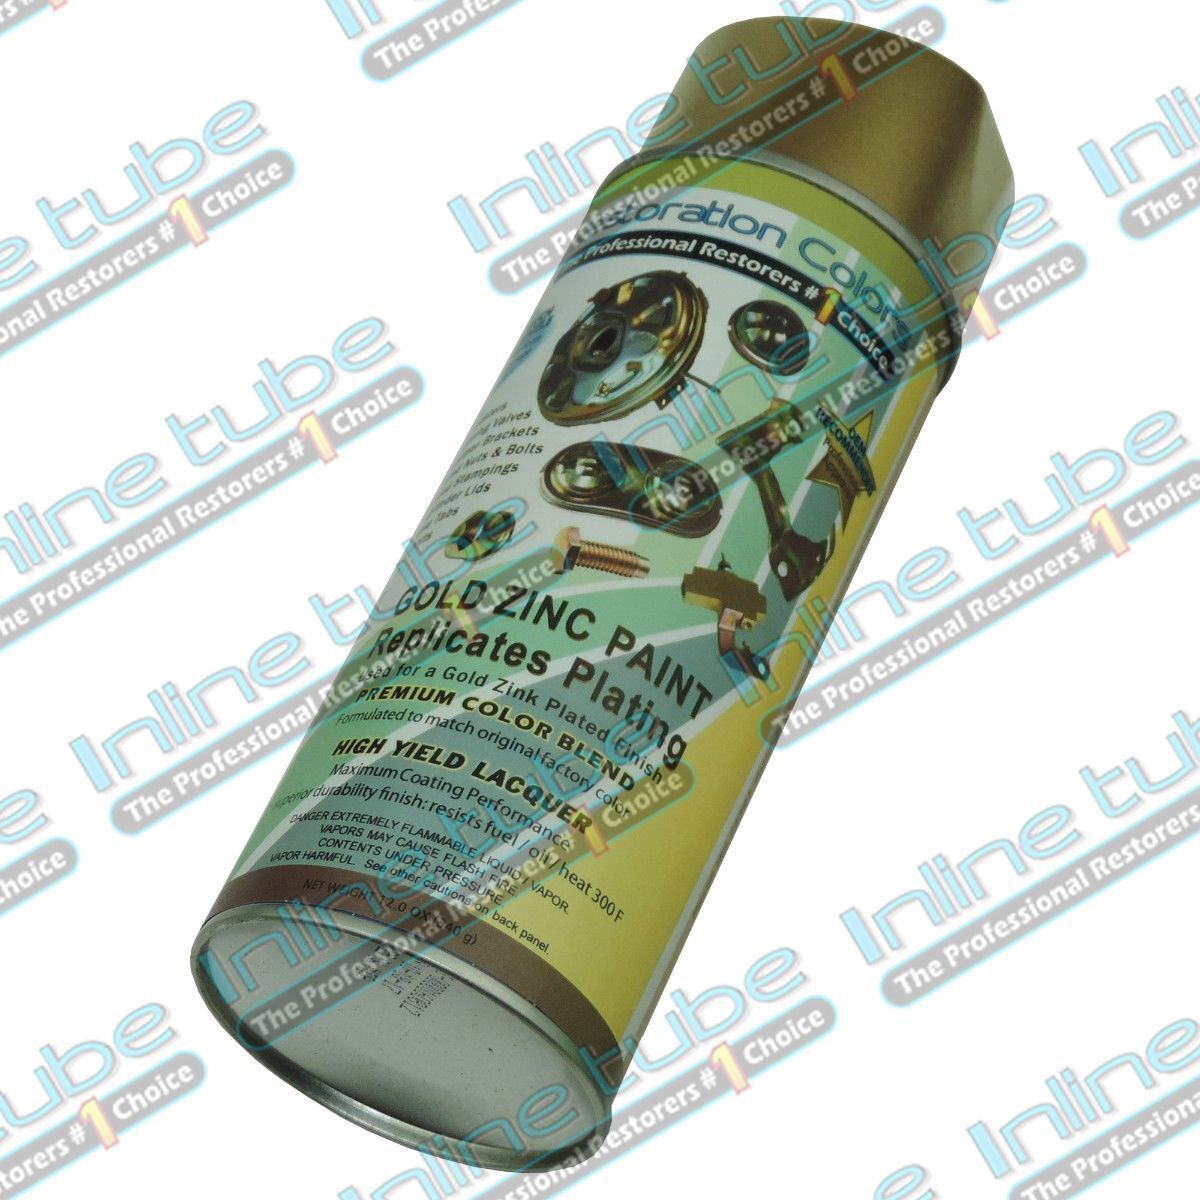 64-81 Gm Gold Zinc Cadmium Plating Iridescent Color Spray Paint Booster Bracket